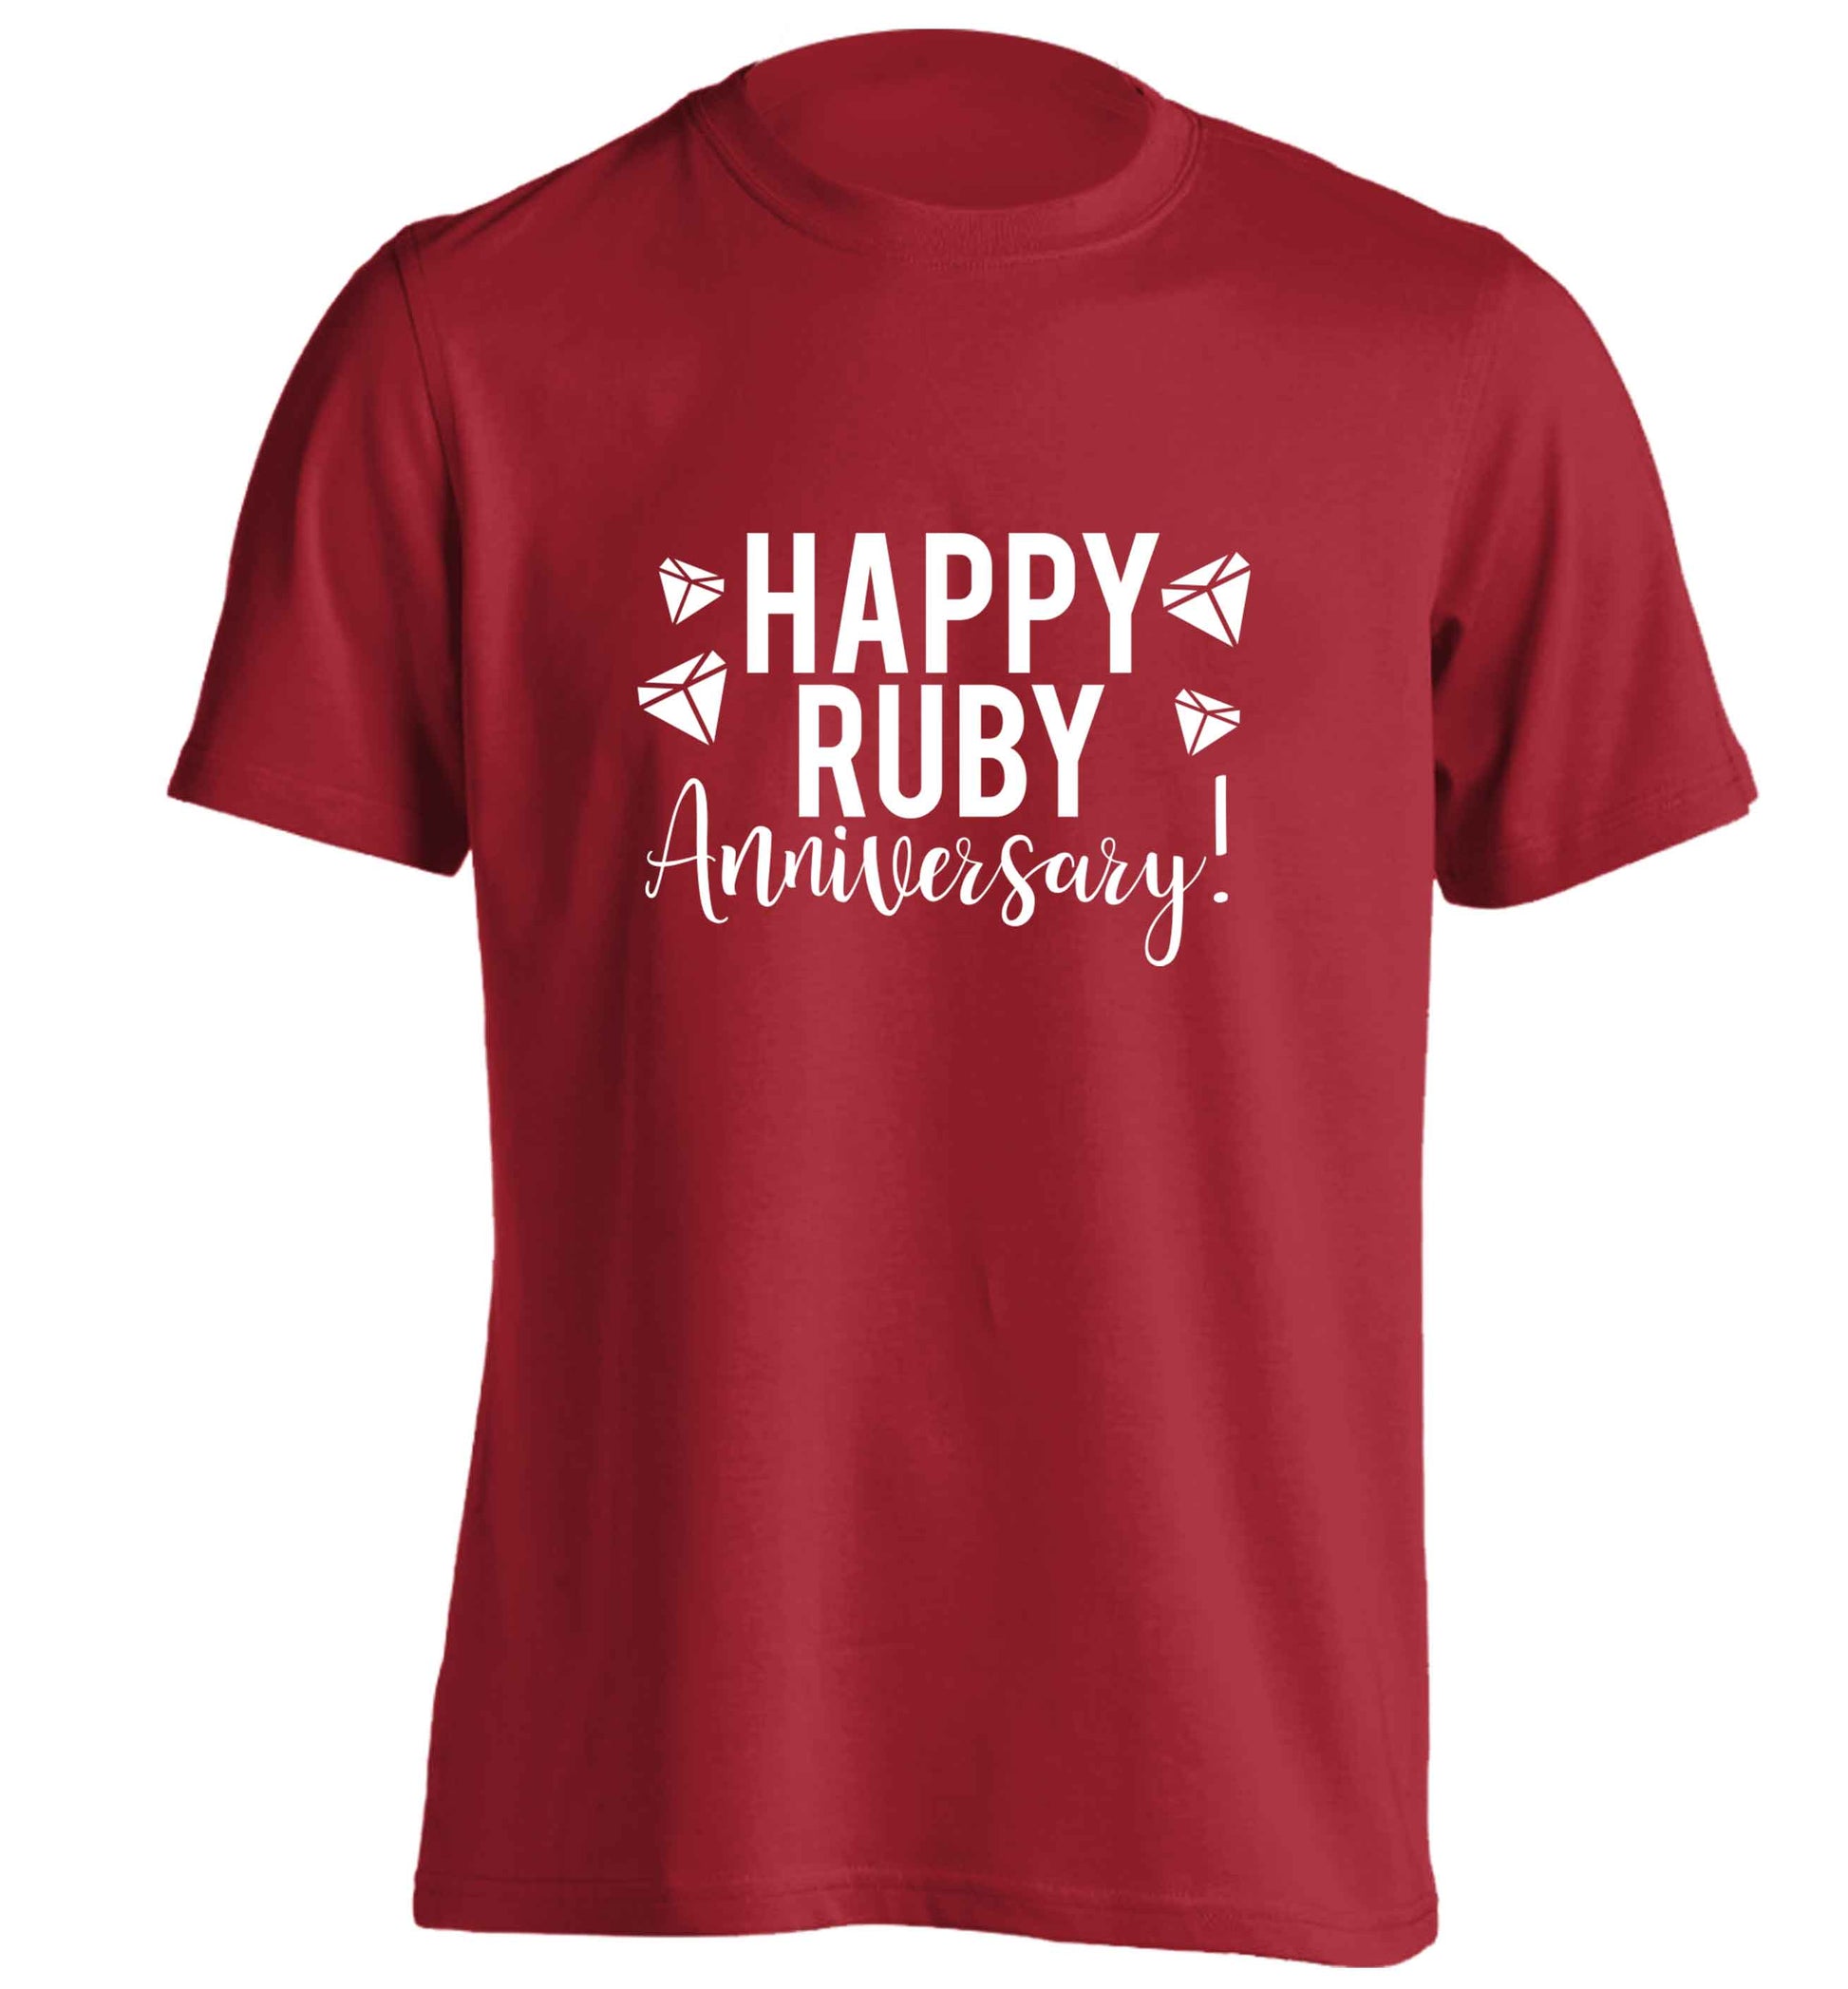 Happy ruby anniversary! adults unisex red Tshirt 2XL